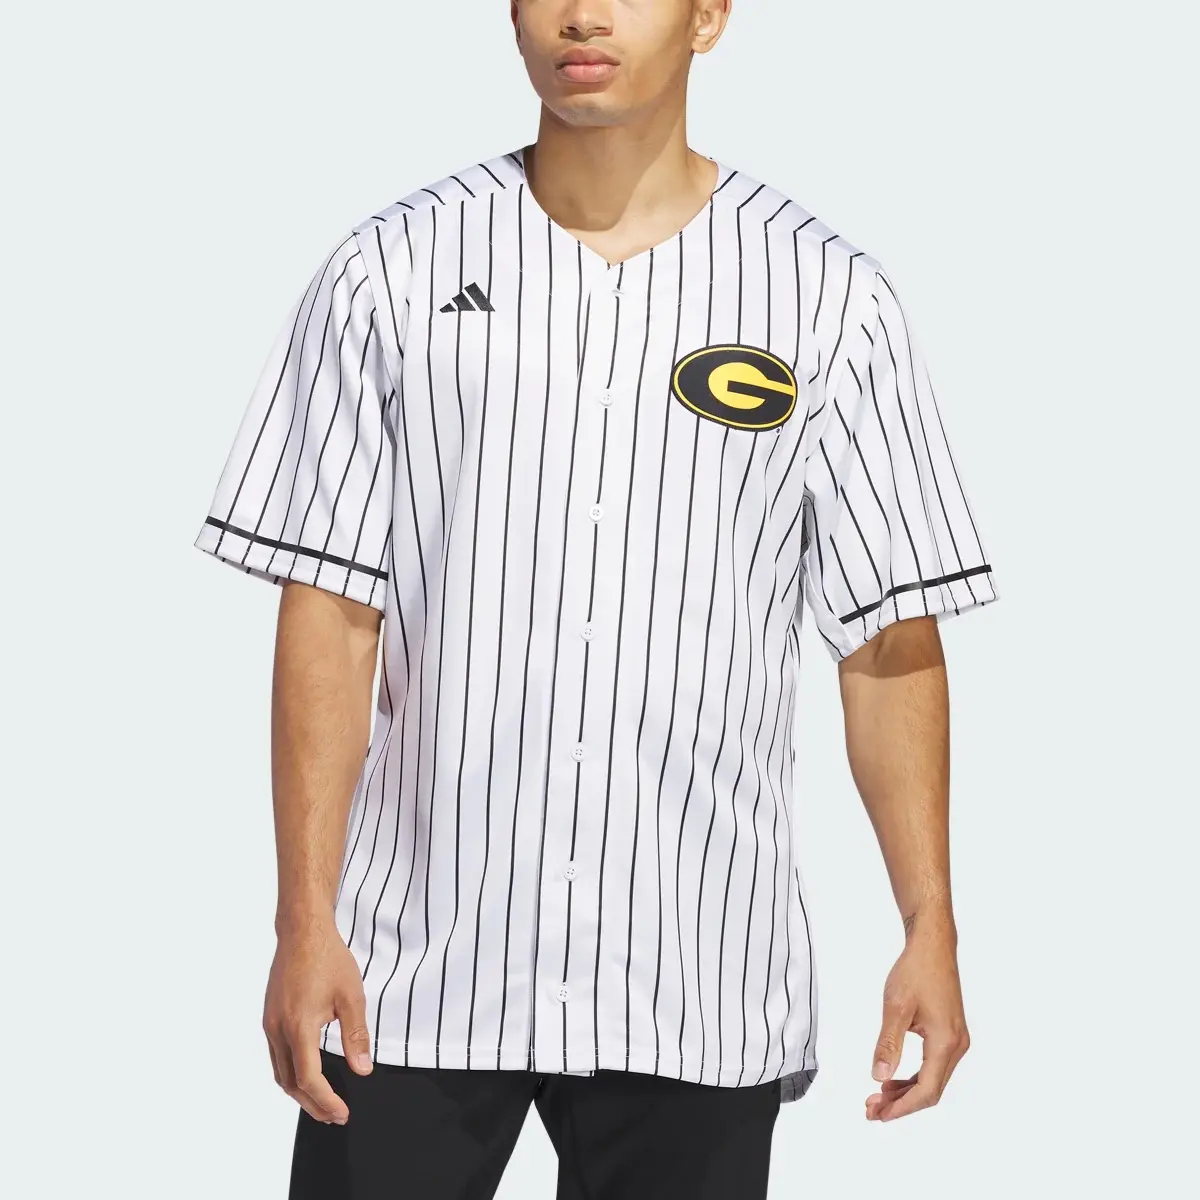 Adidas Tigers Baseball Jersey. 1